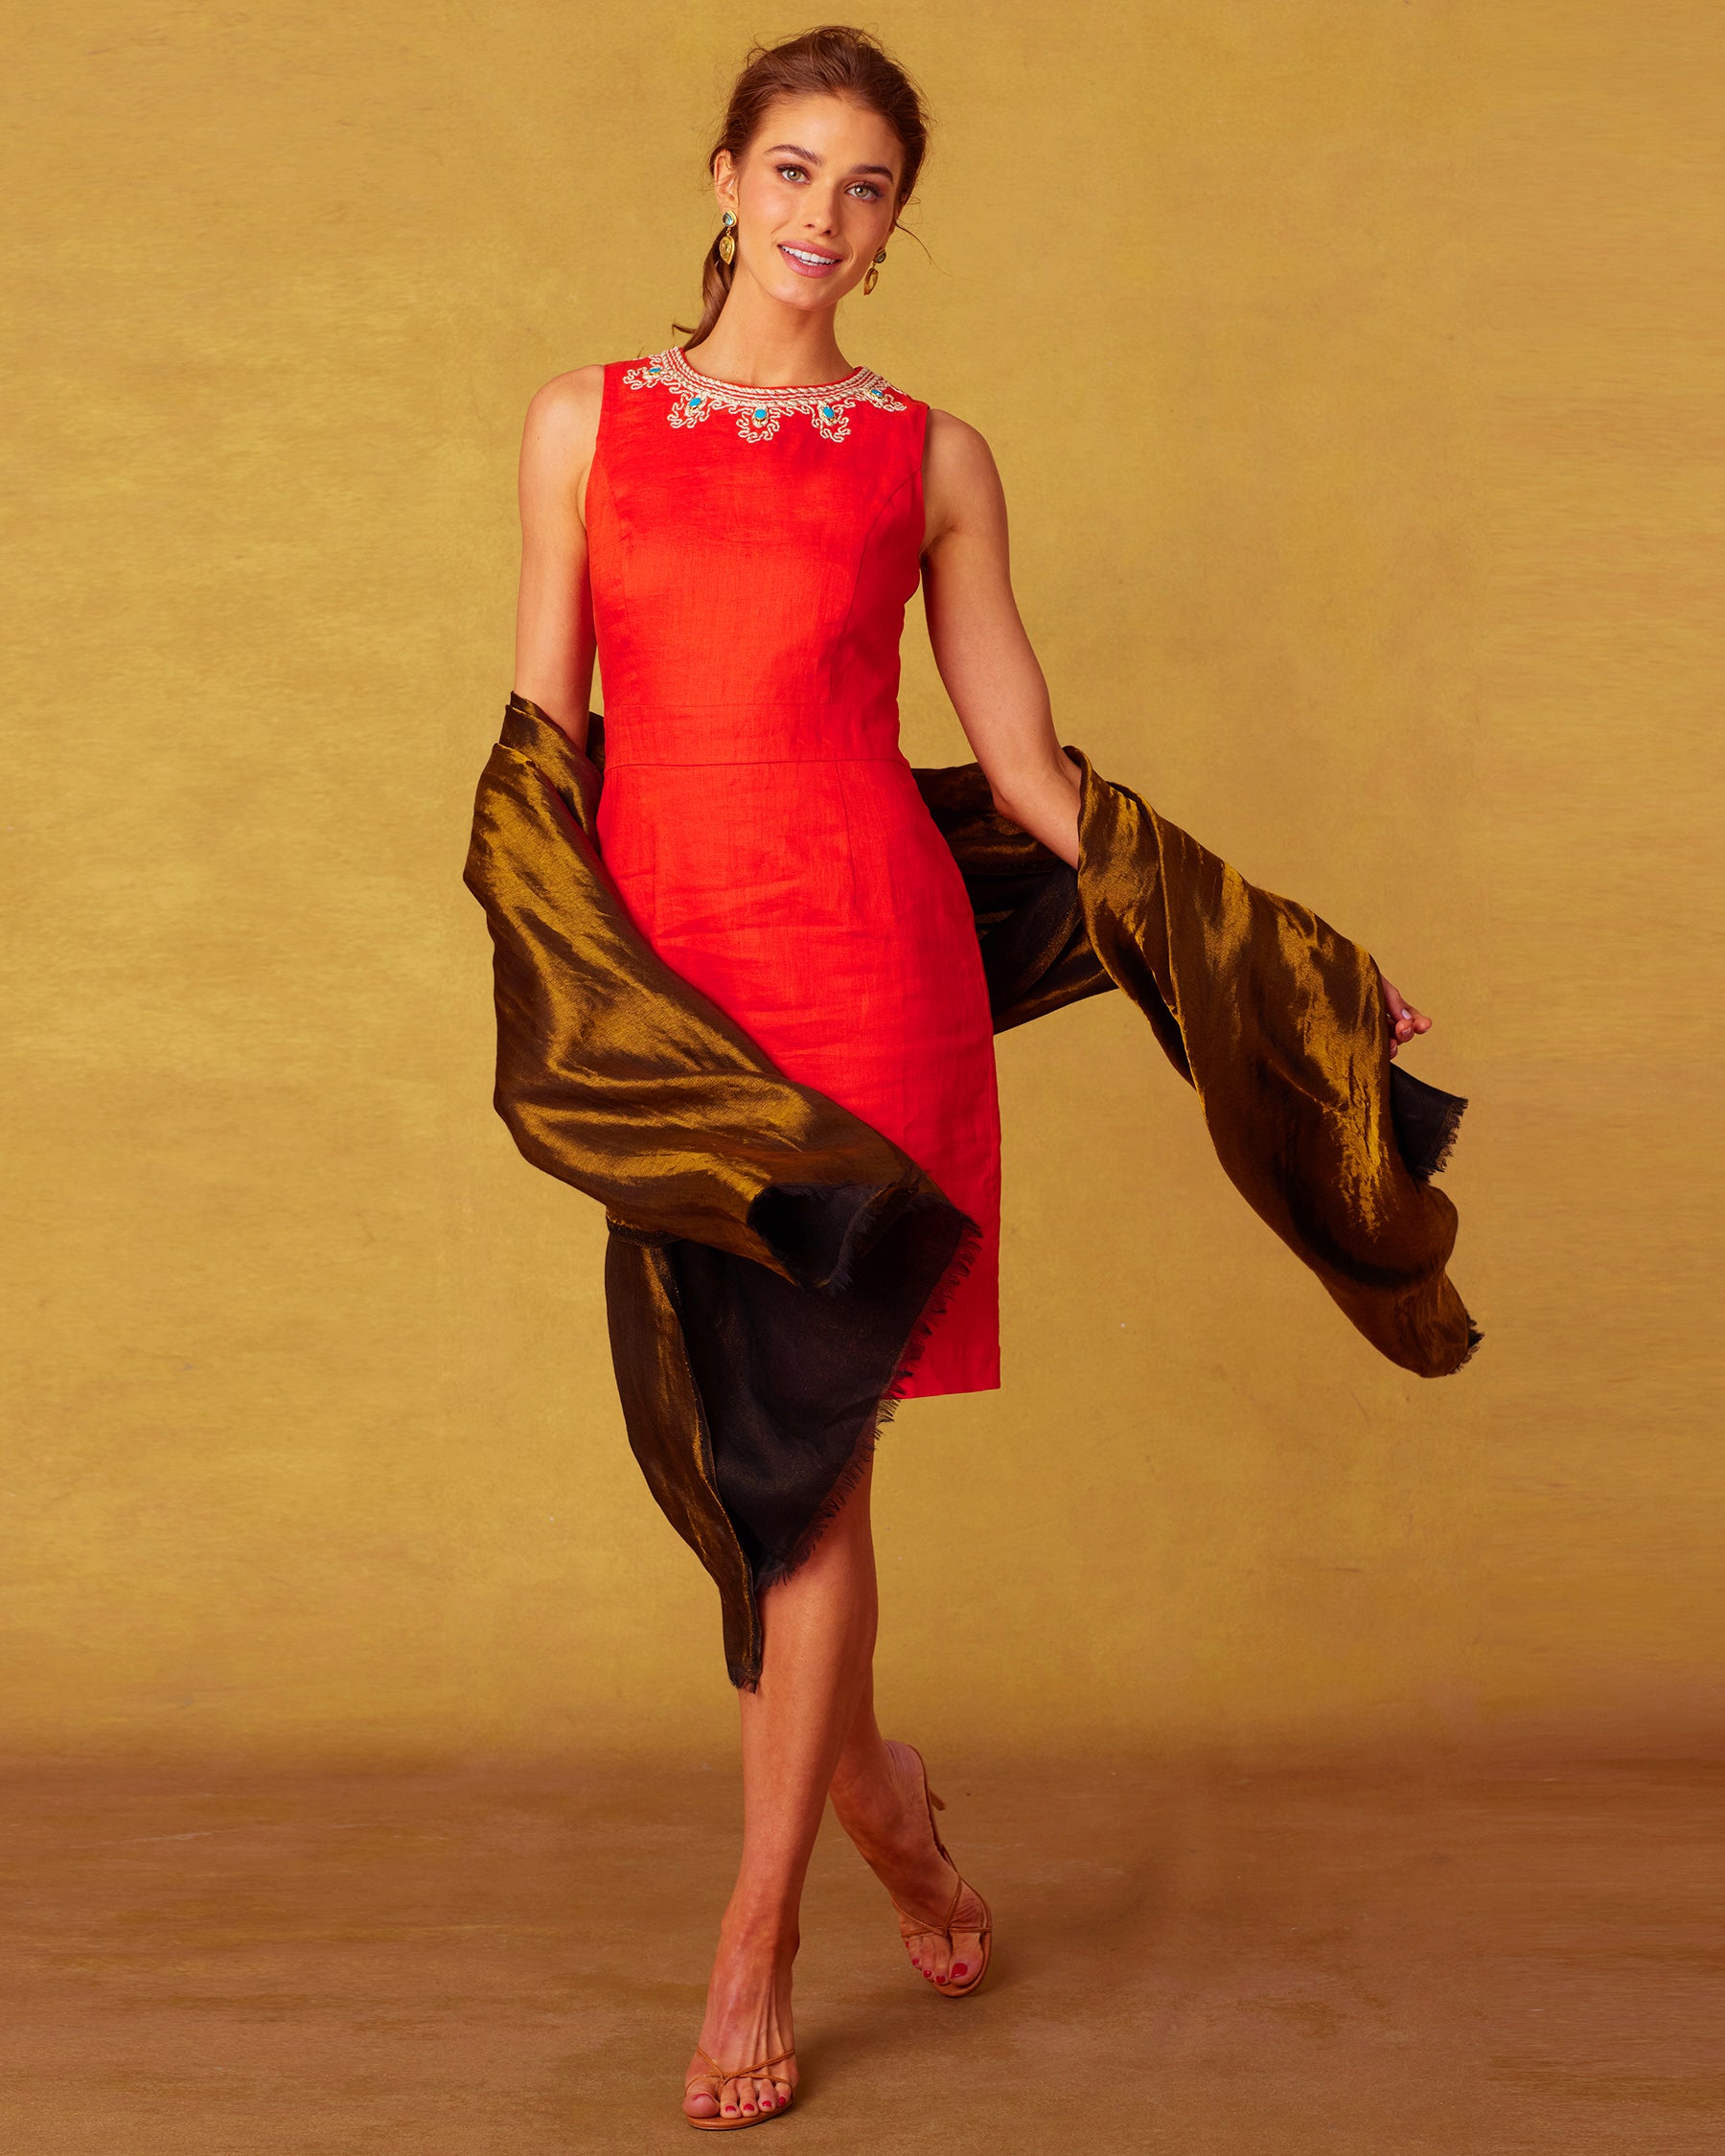 Adriana Sheath Dress in Coral Orange Linen and Gold Embellishment